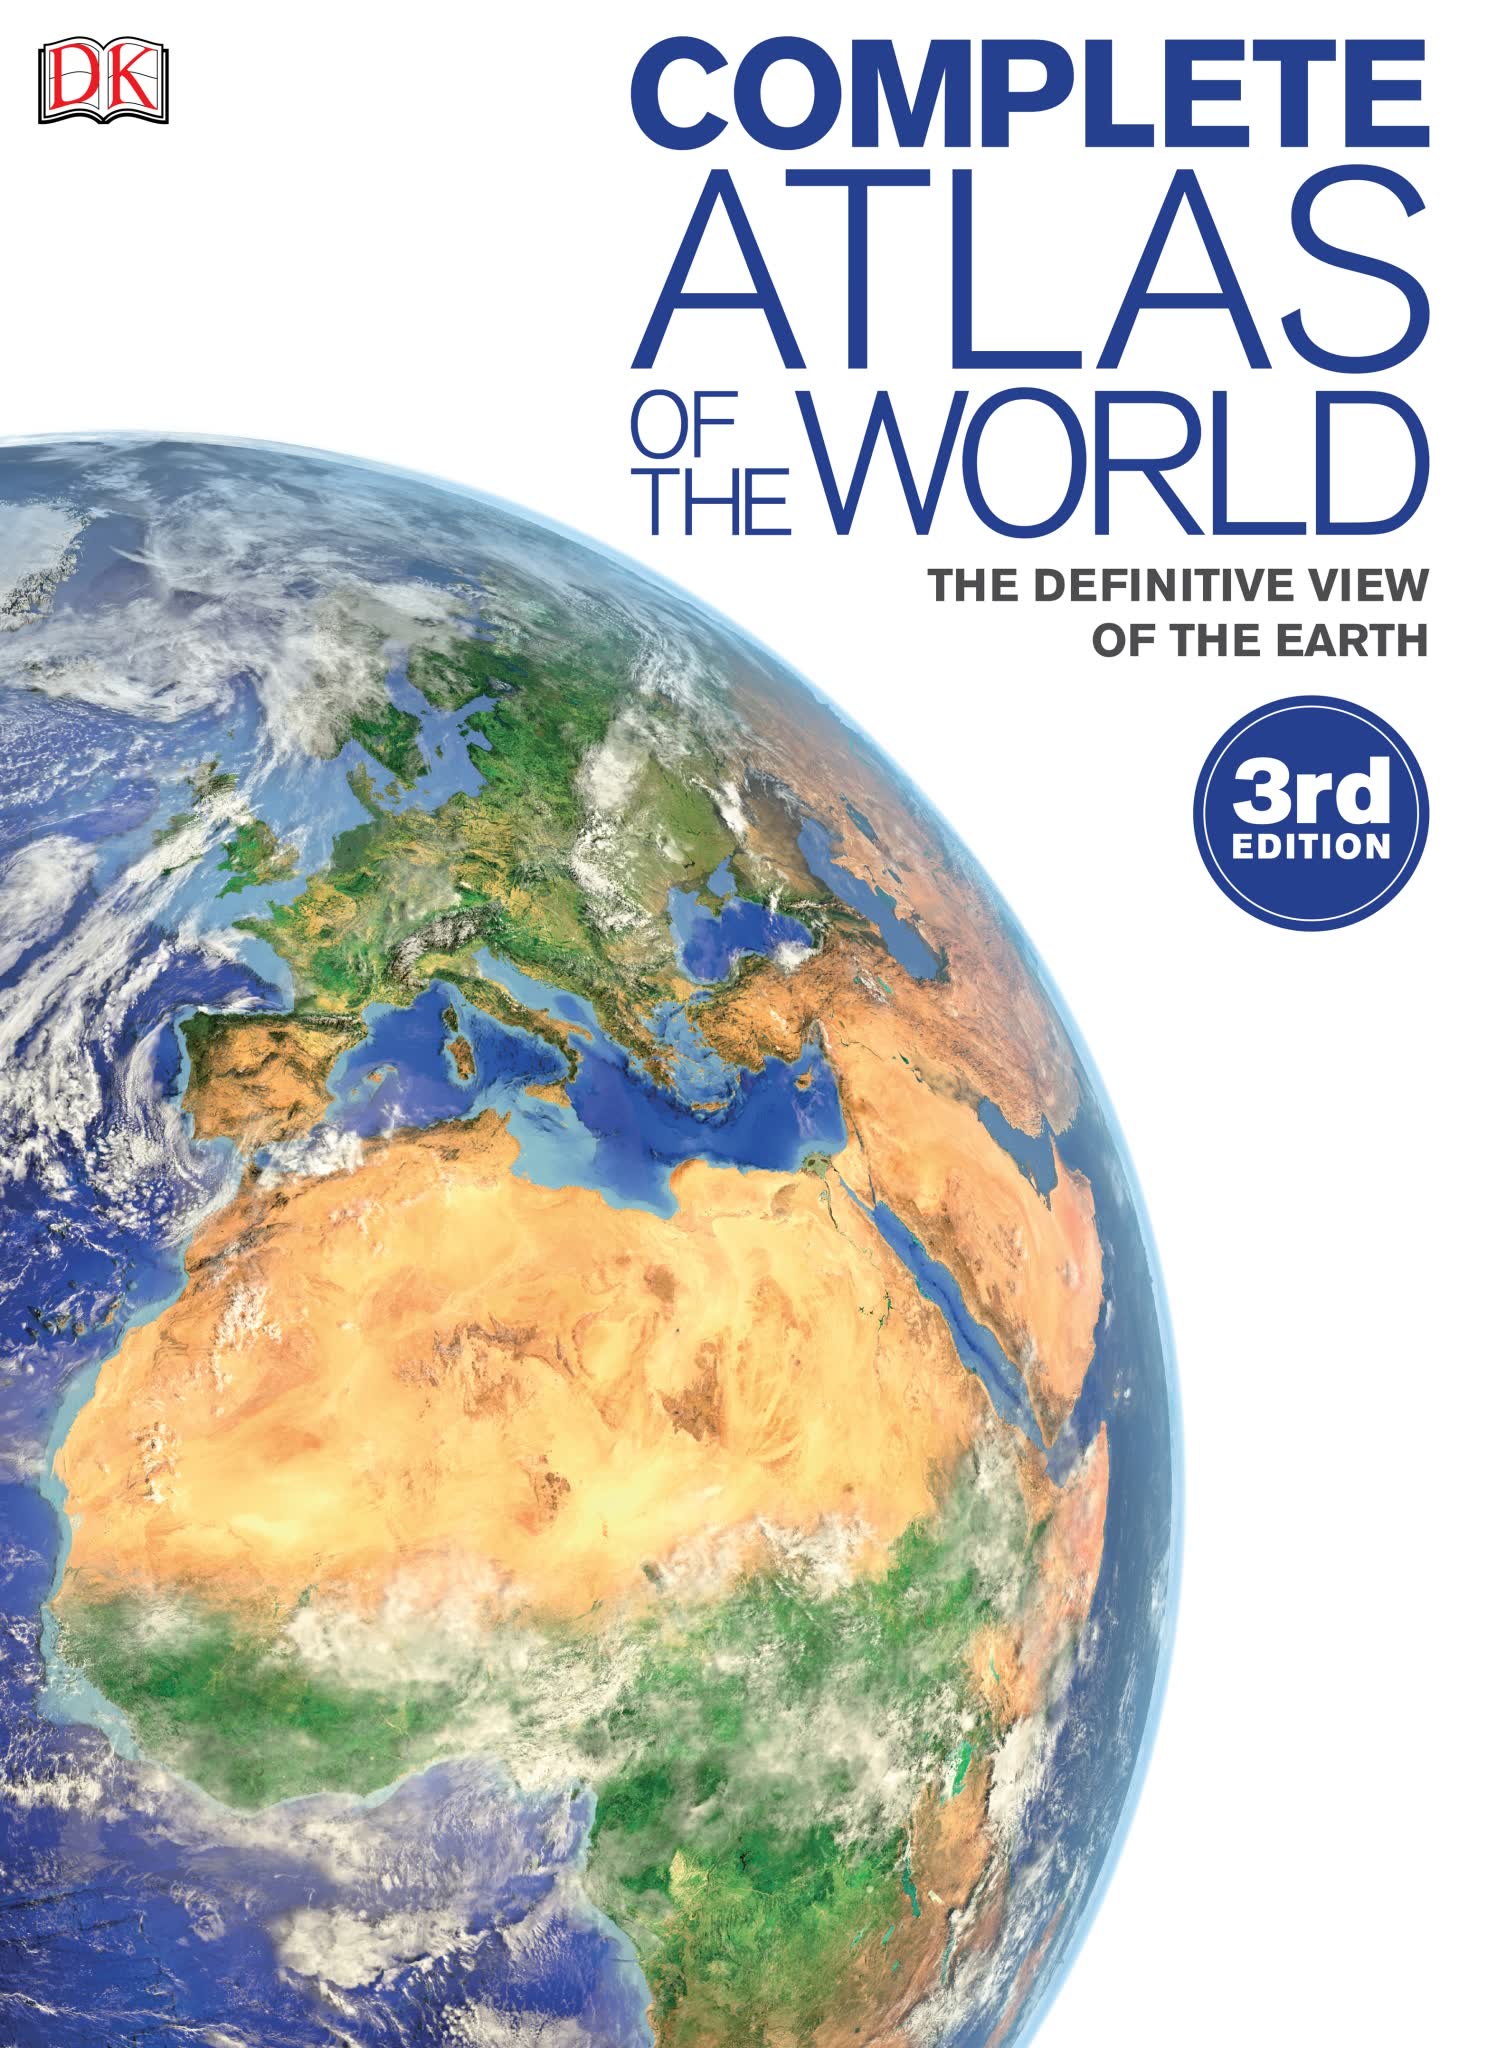 《Complete-Atlas-of-the-World》434页DK完整世界地图集第三版